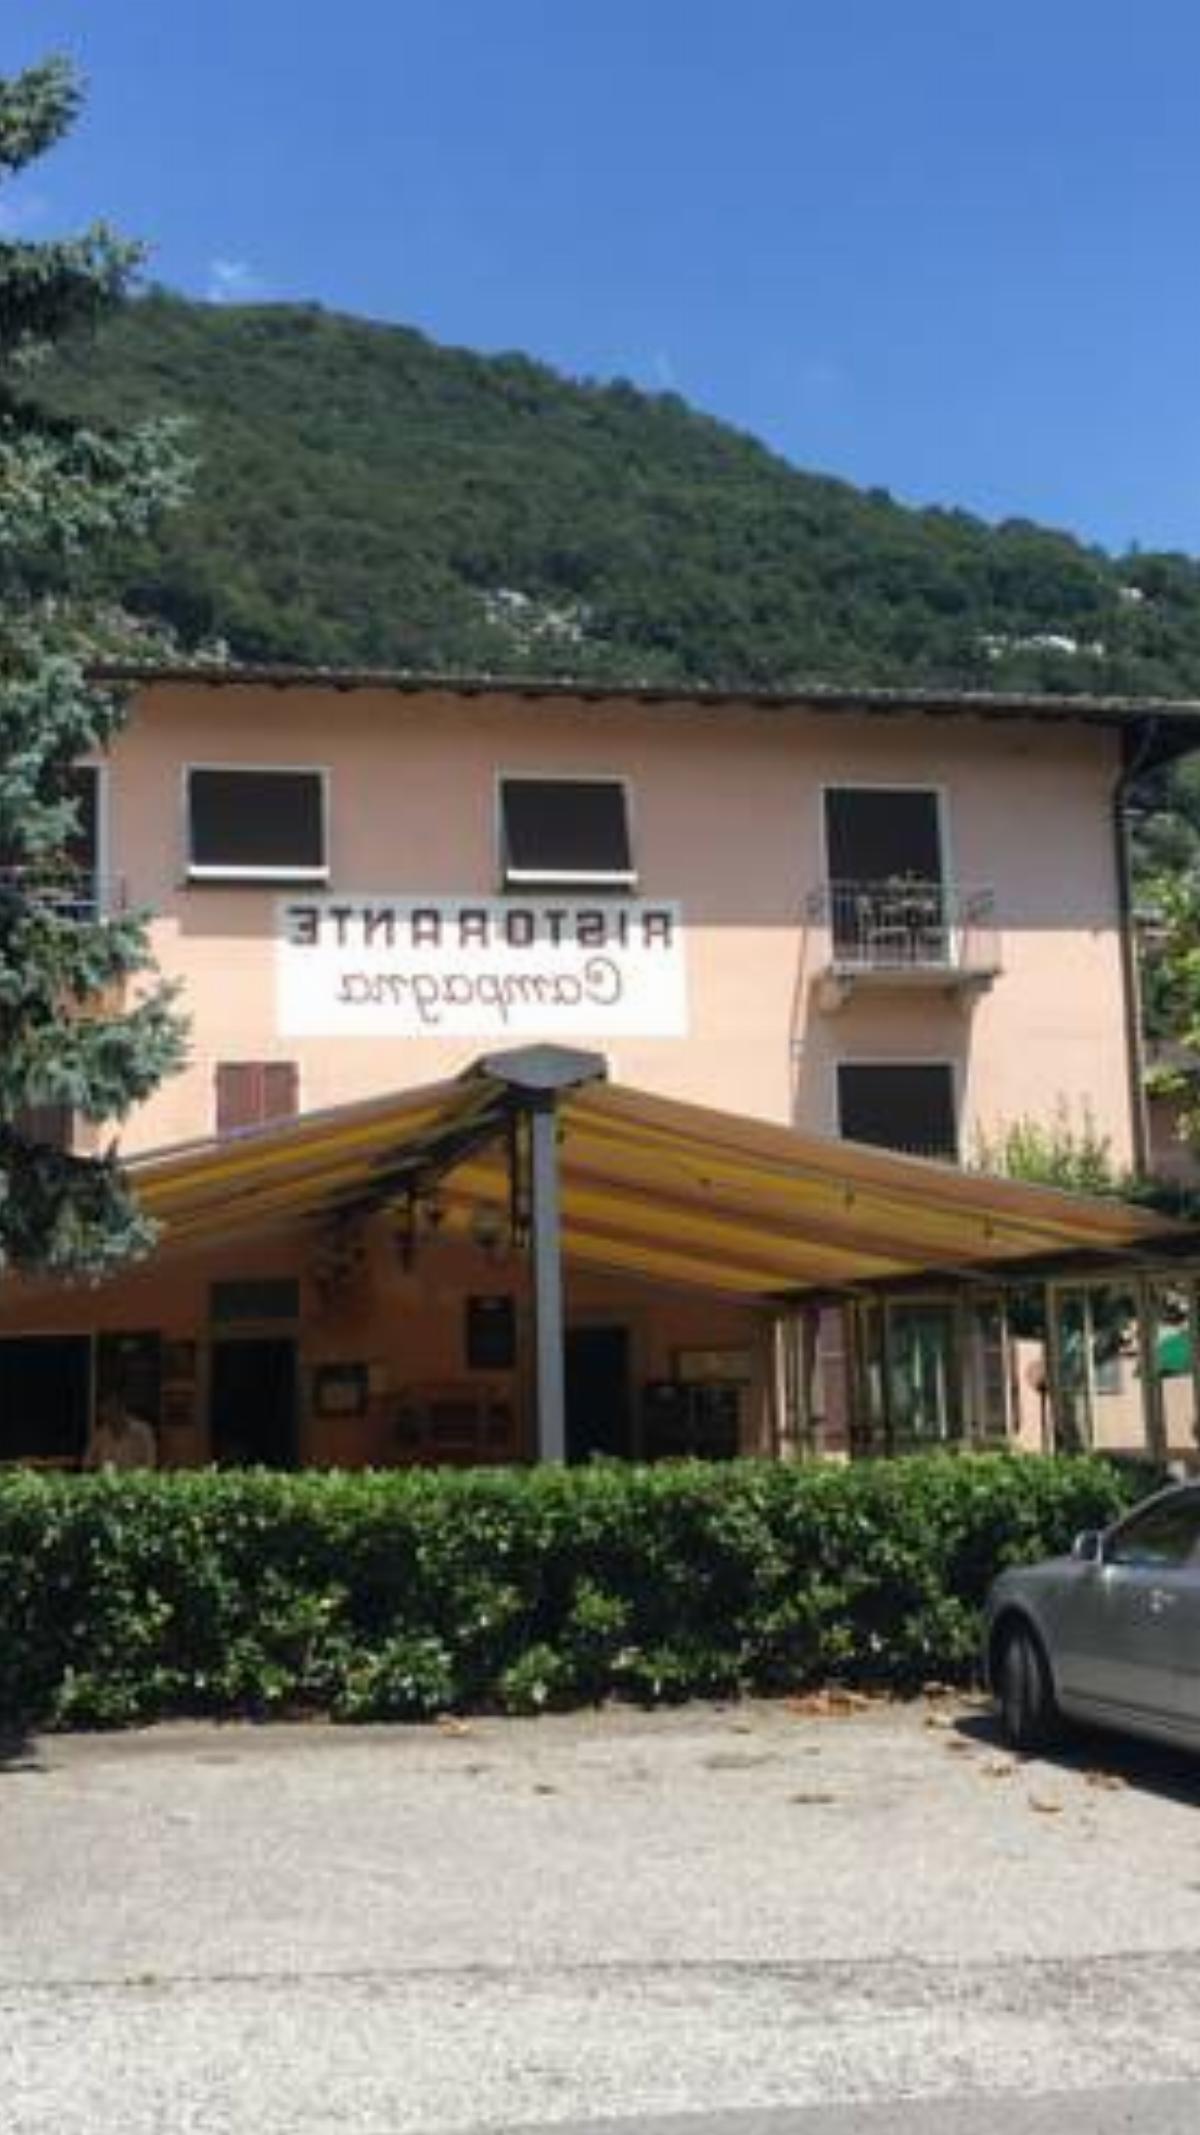 Ristorante Campagna Hotel Cugnasco Switzerland